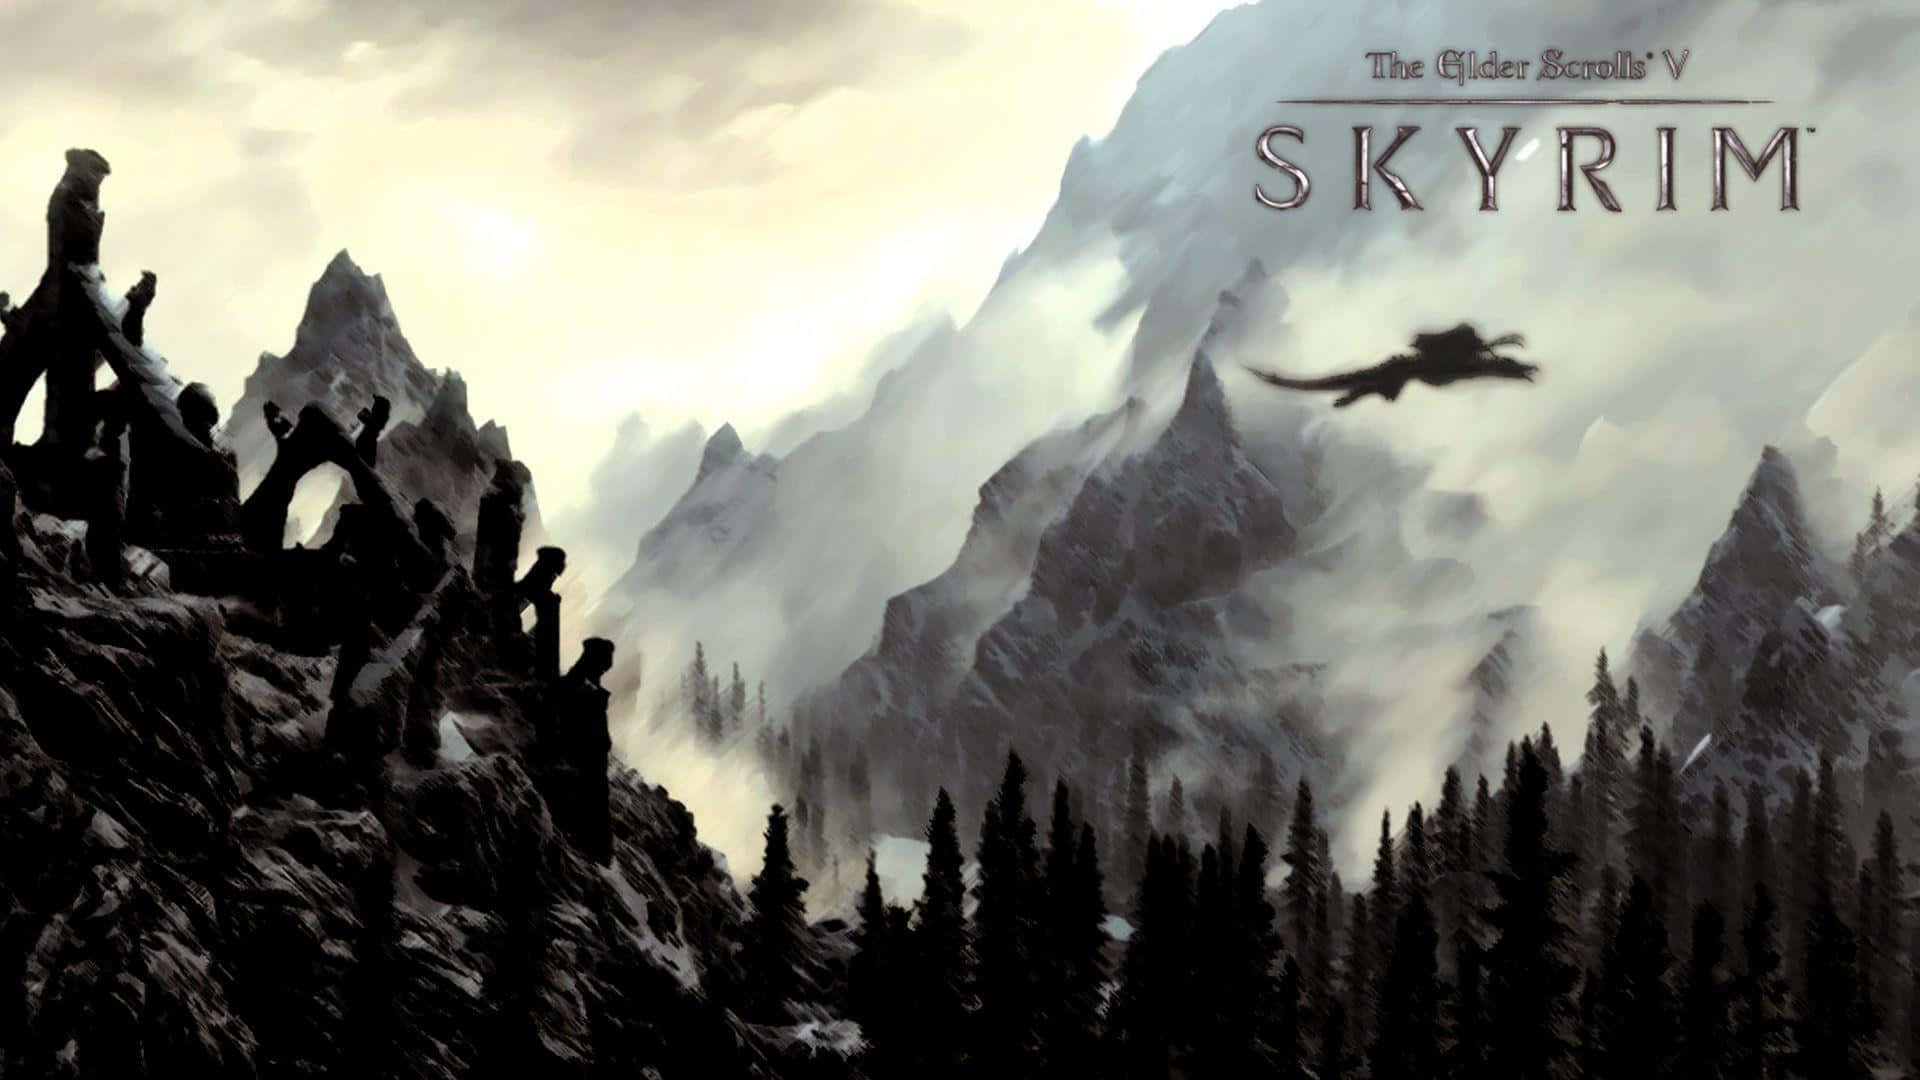 Bakgrundfrån The Elder Scrolls V: Skyrim, I Storlek 1920 X 1080.